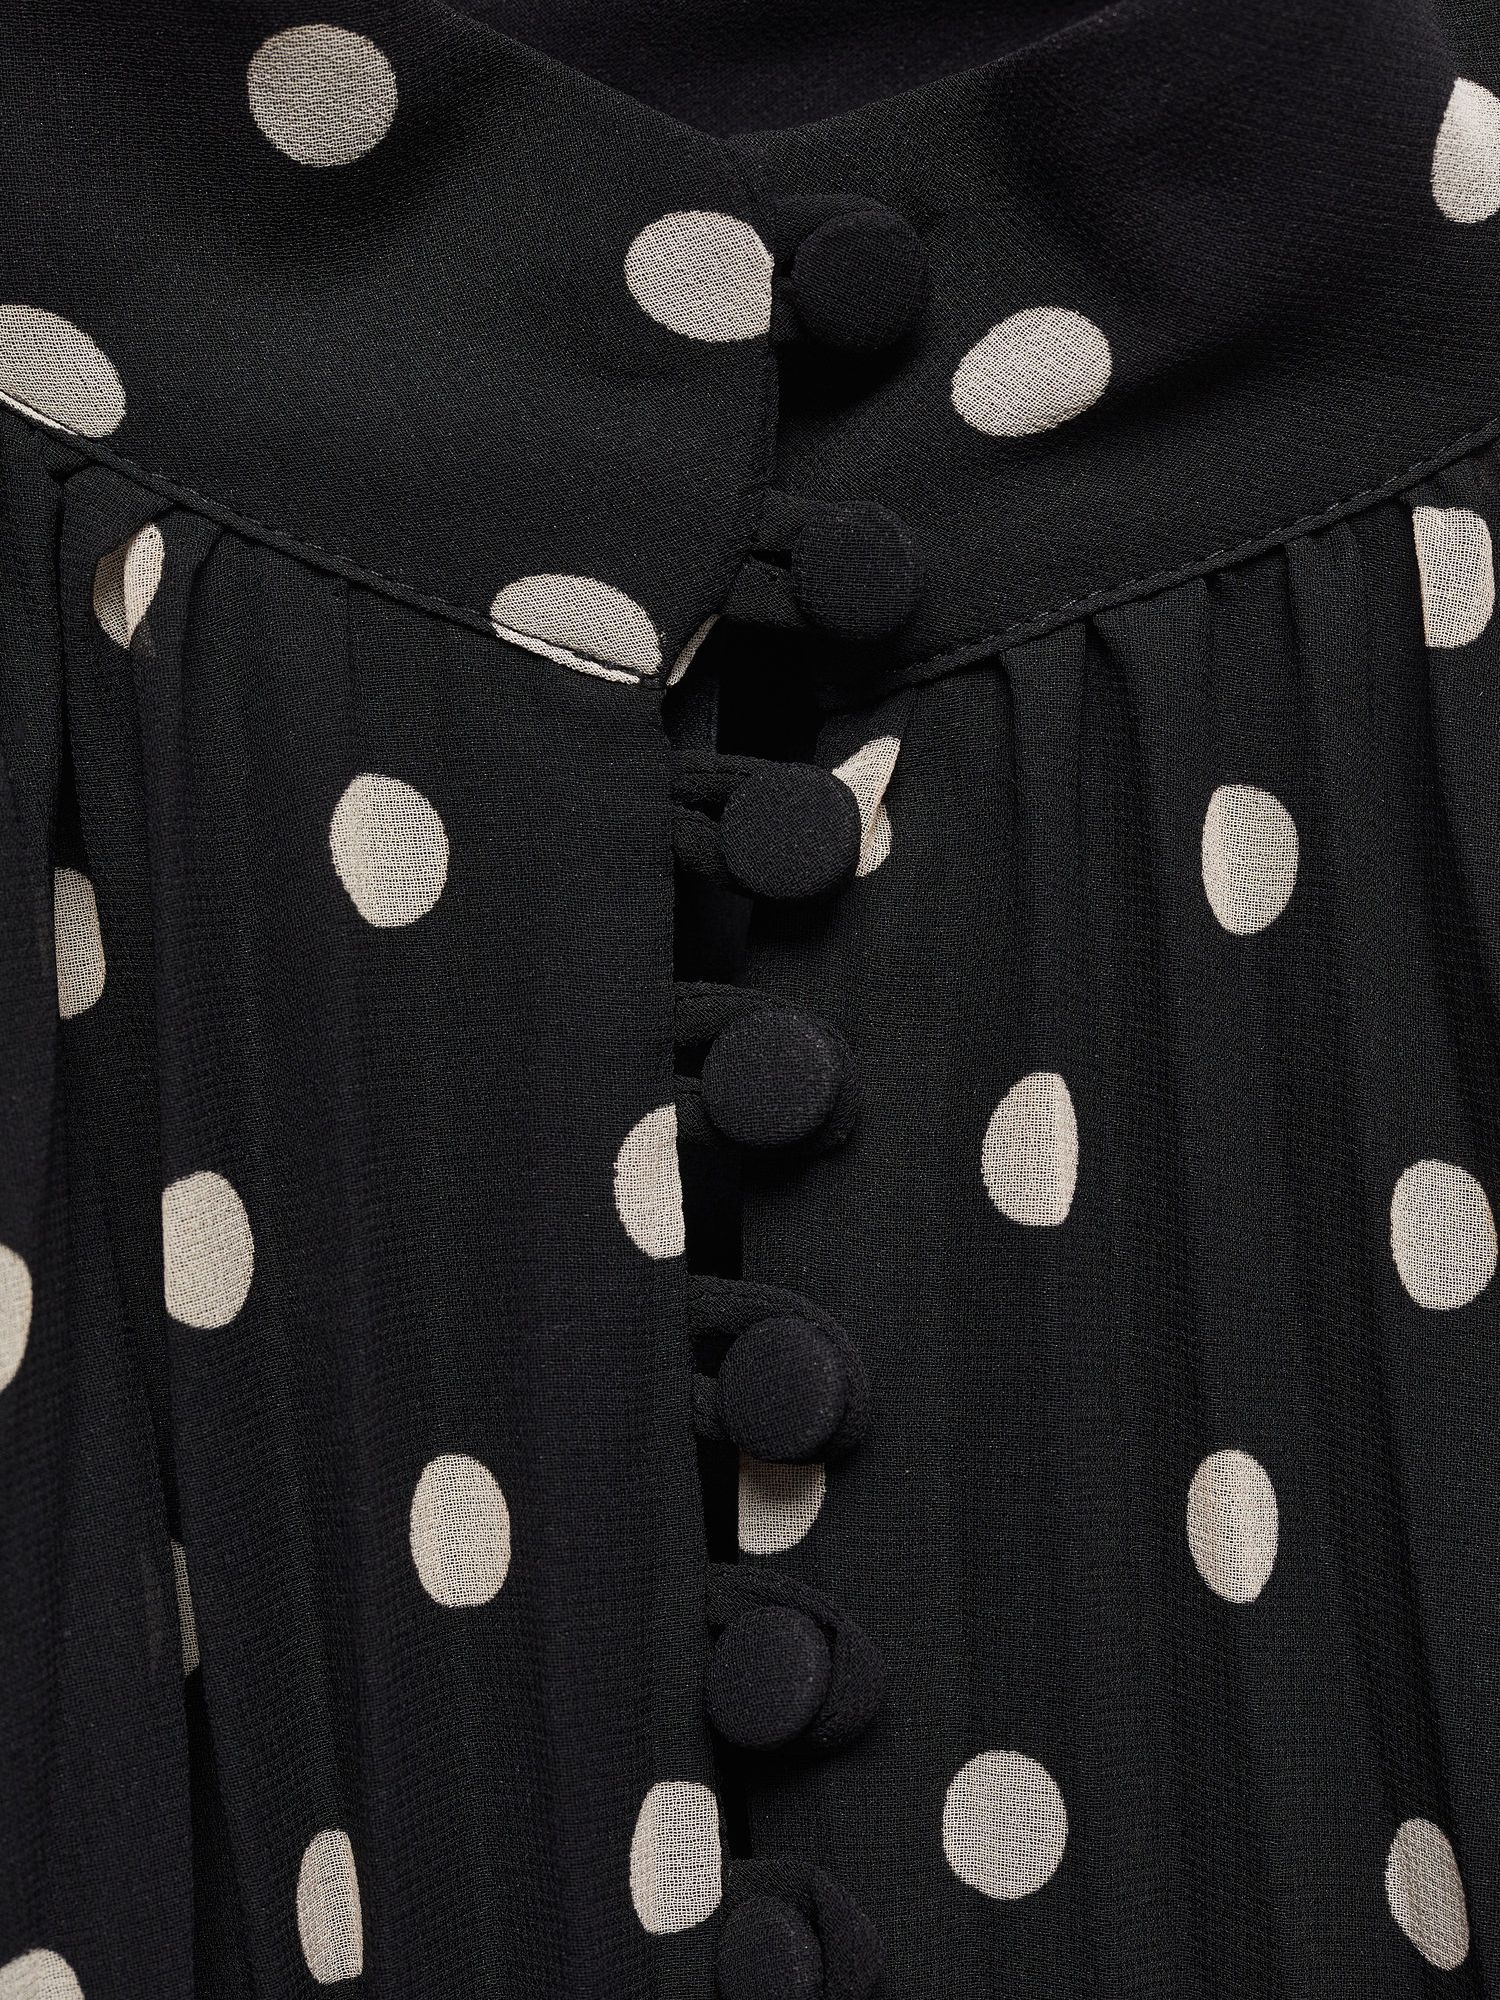 Mango Adela Polka Dot Pleated Midi Dress, Black, 10